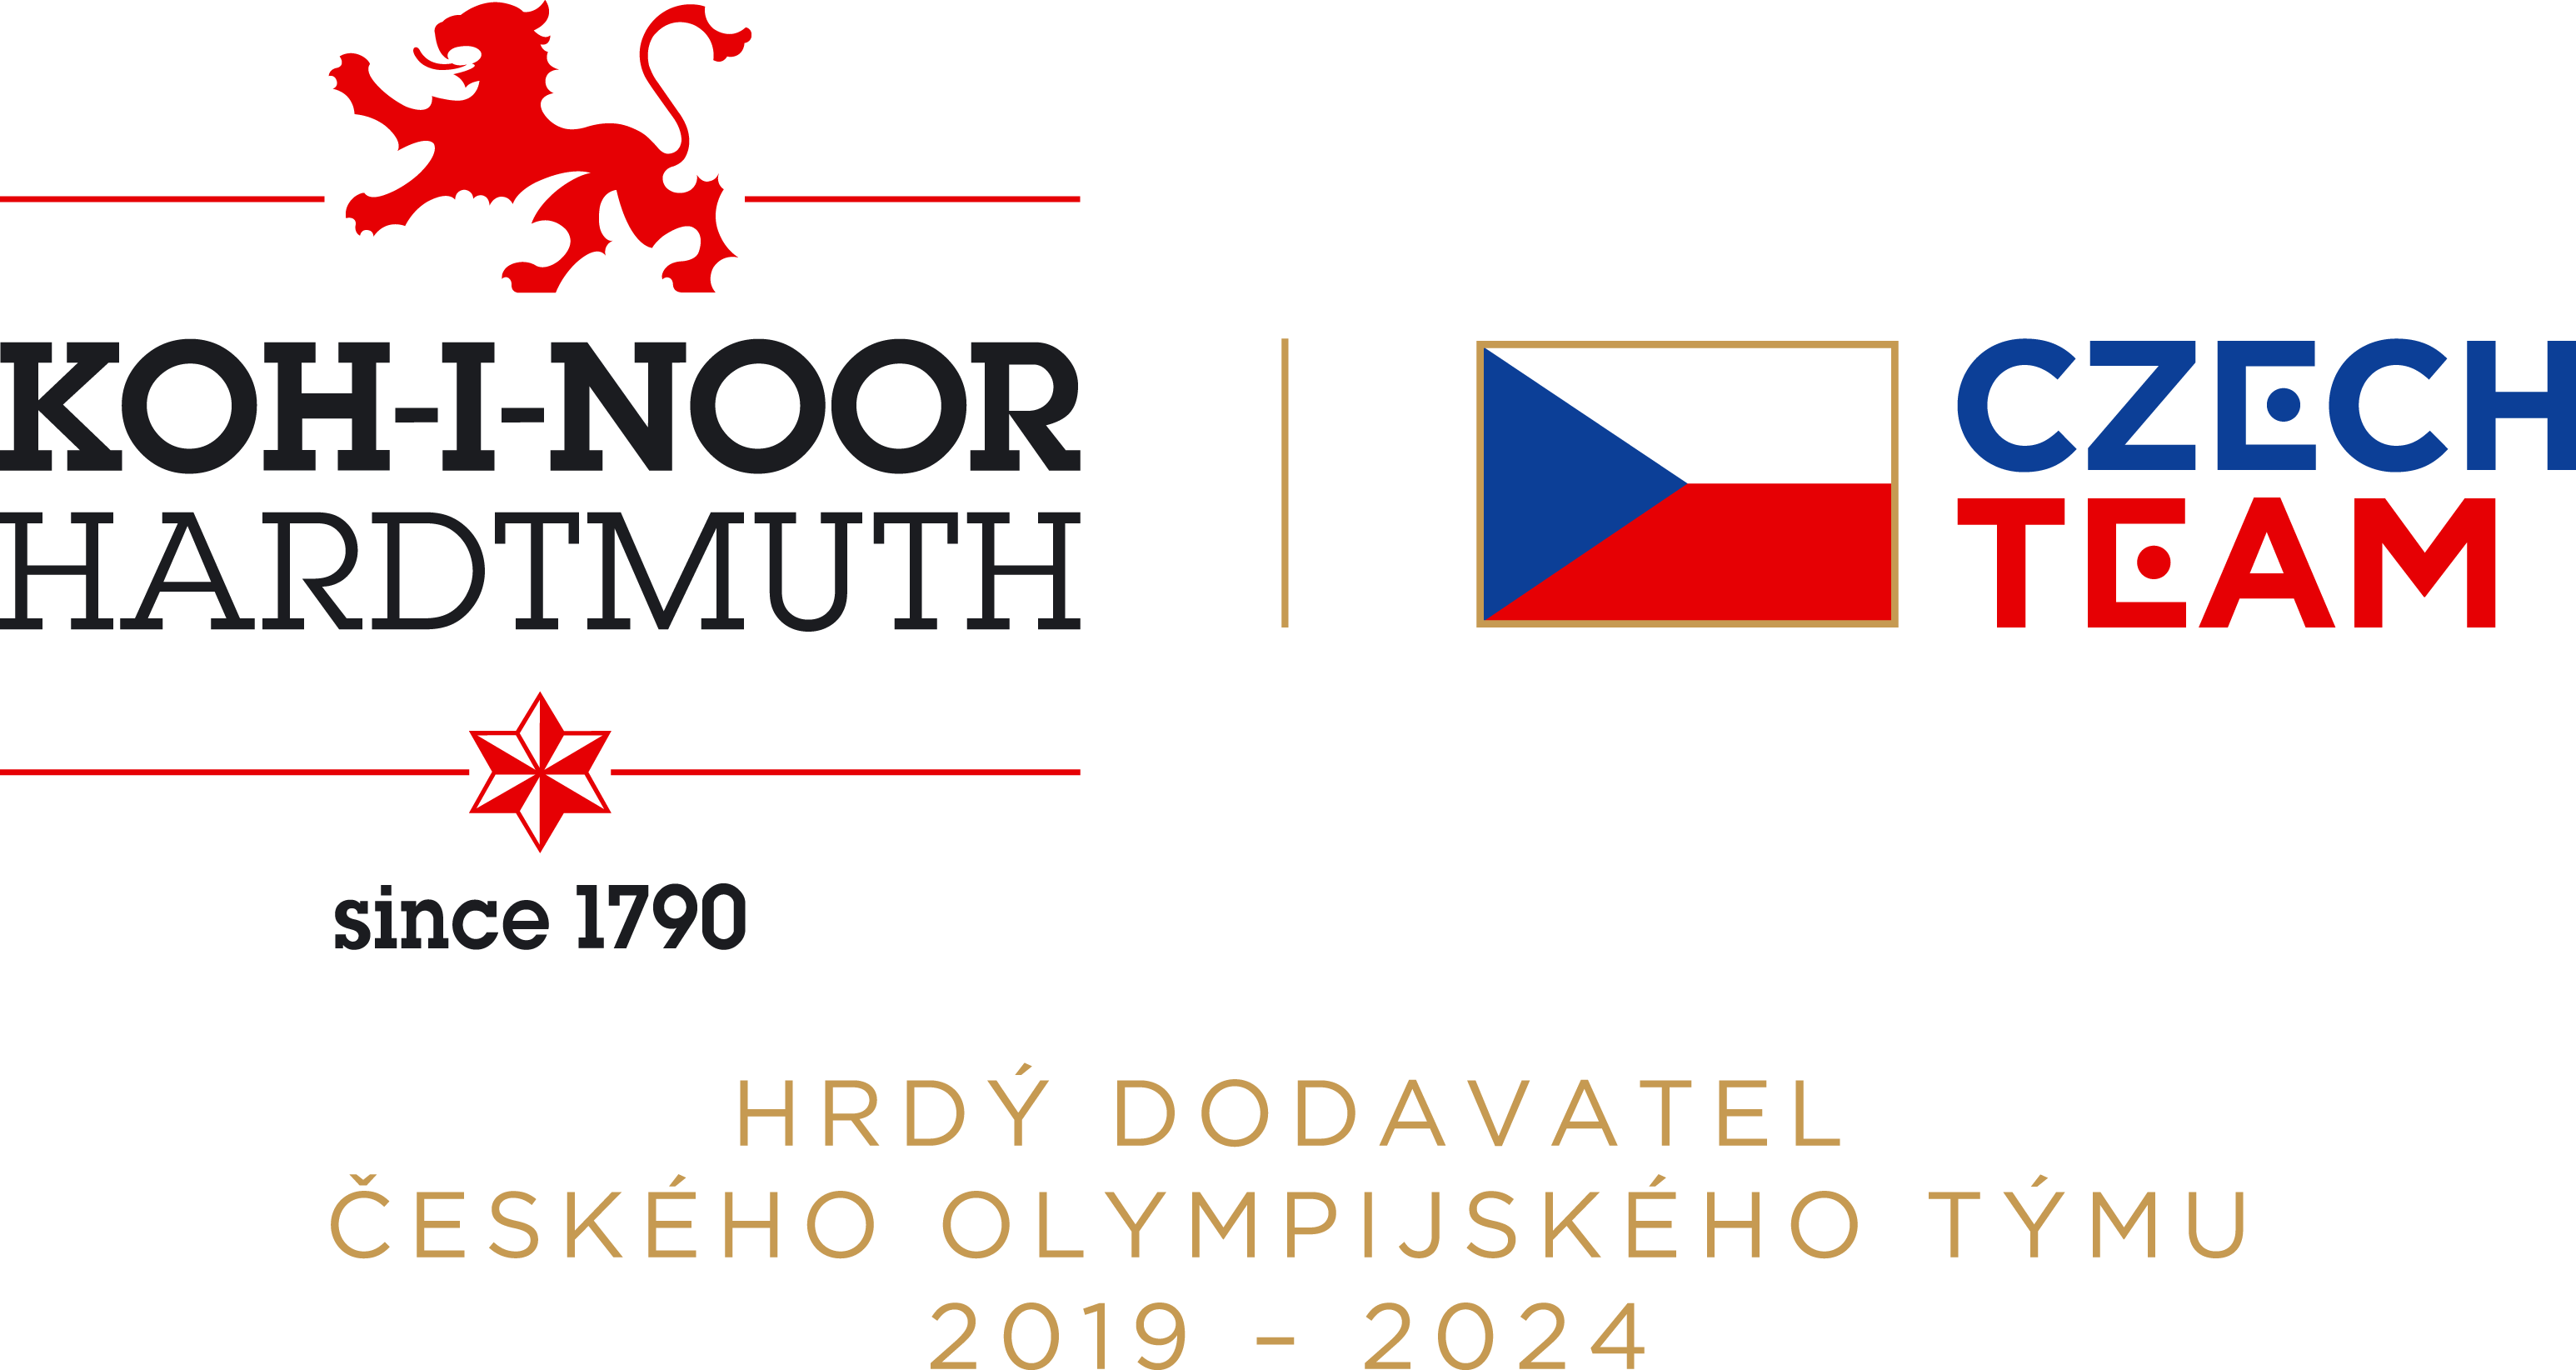 logo KOH-I-NOOR HARDTMUTH a Czech team